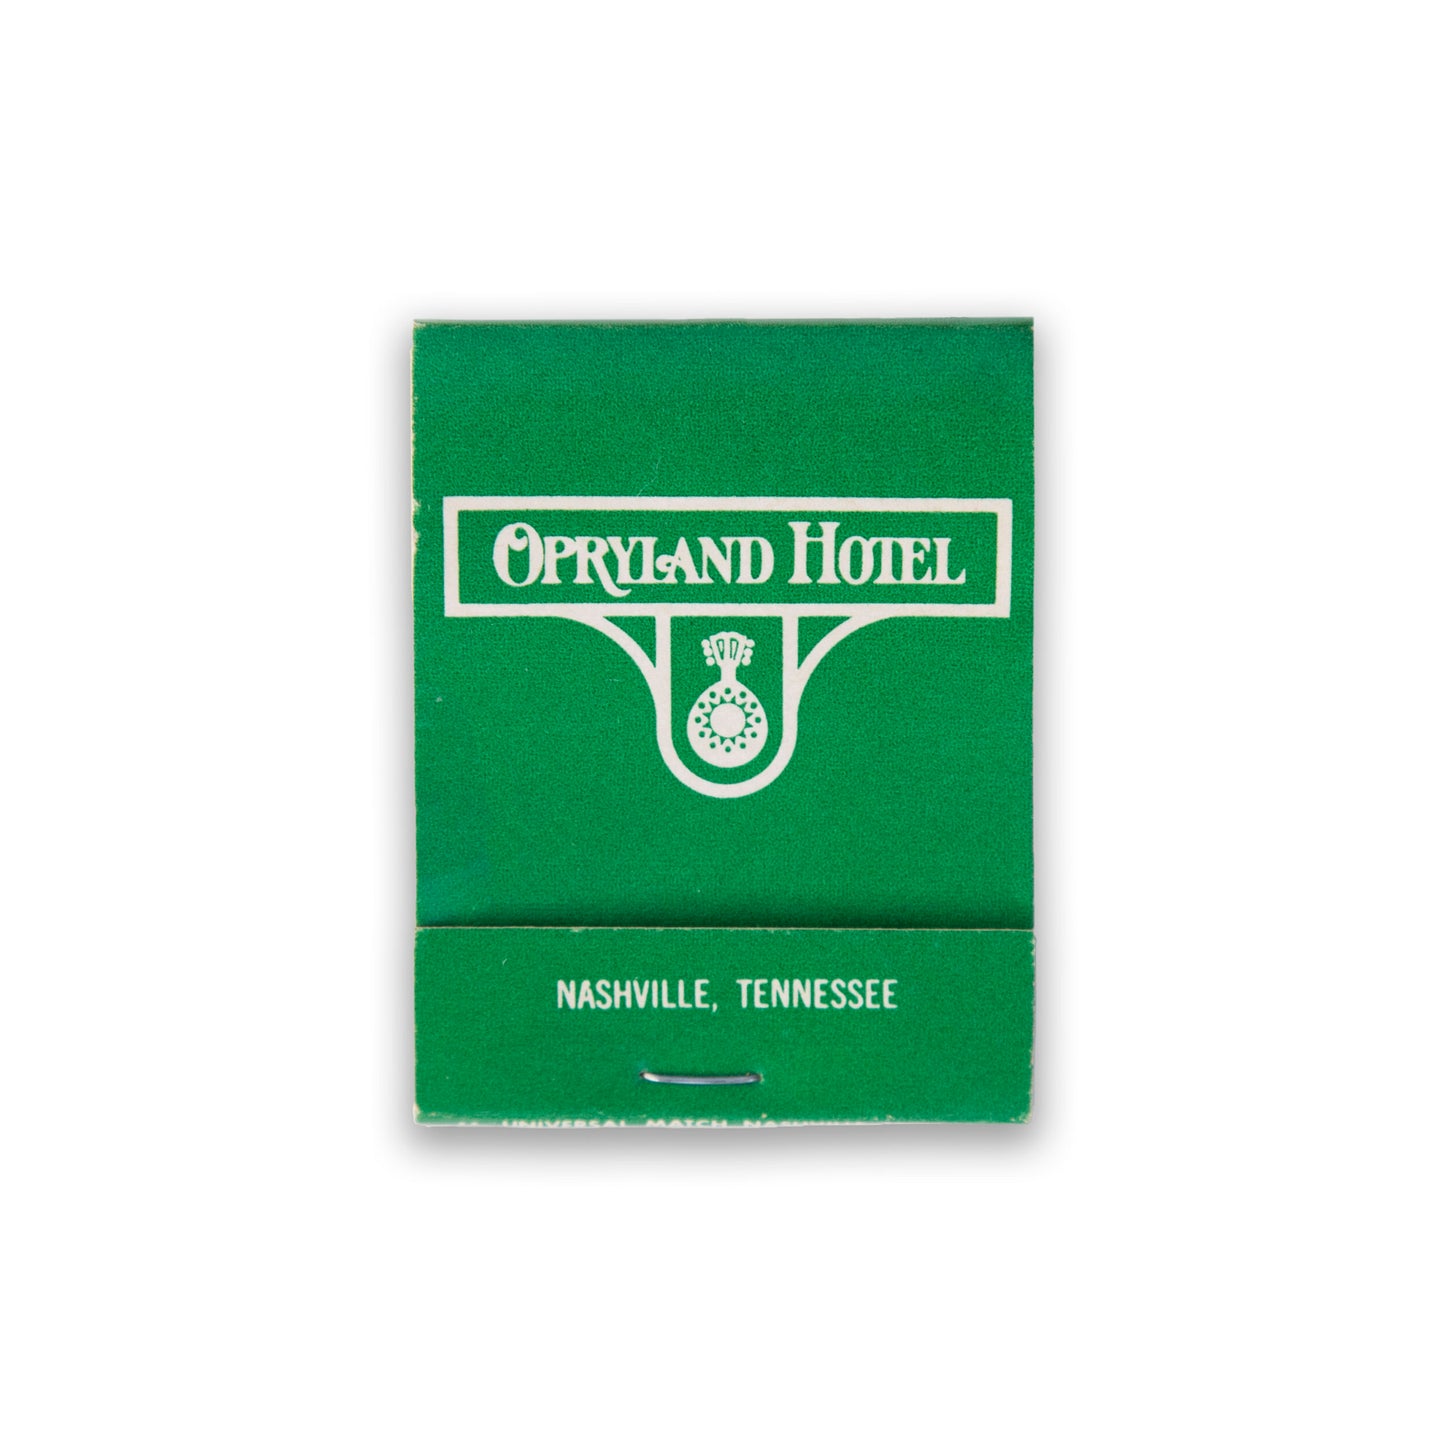 Opryland Hotel